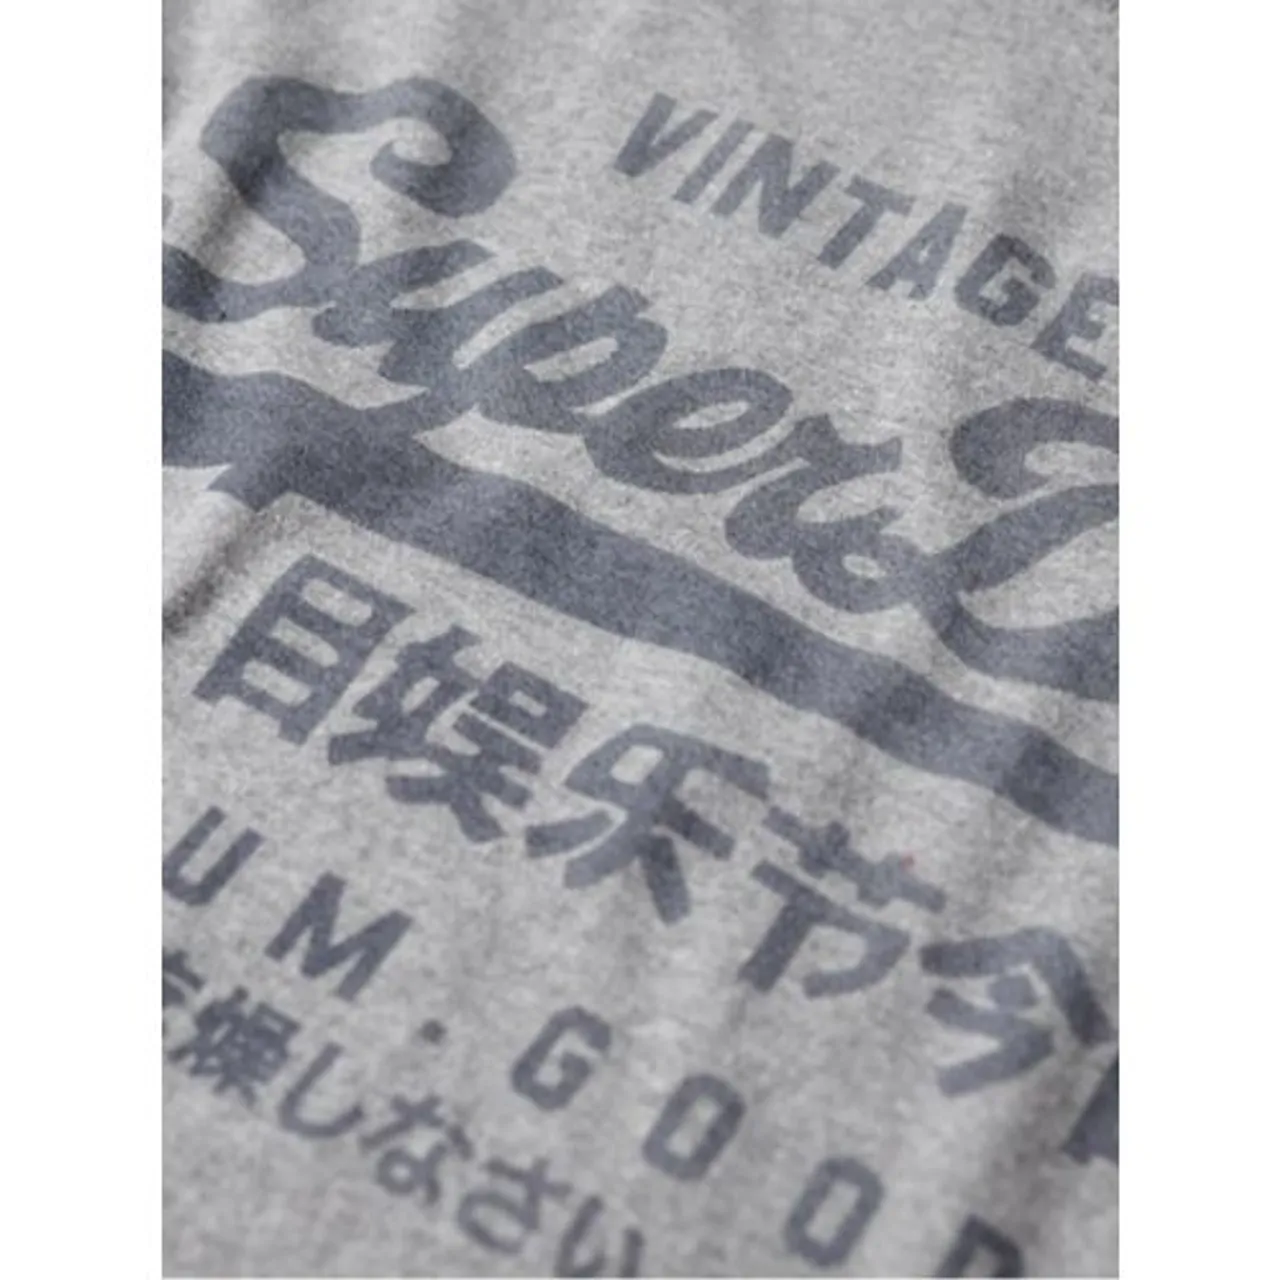 Superdry Mens Ash Grey Marl Classic Heritage T-Shirt